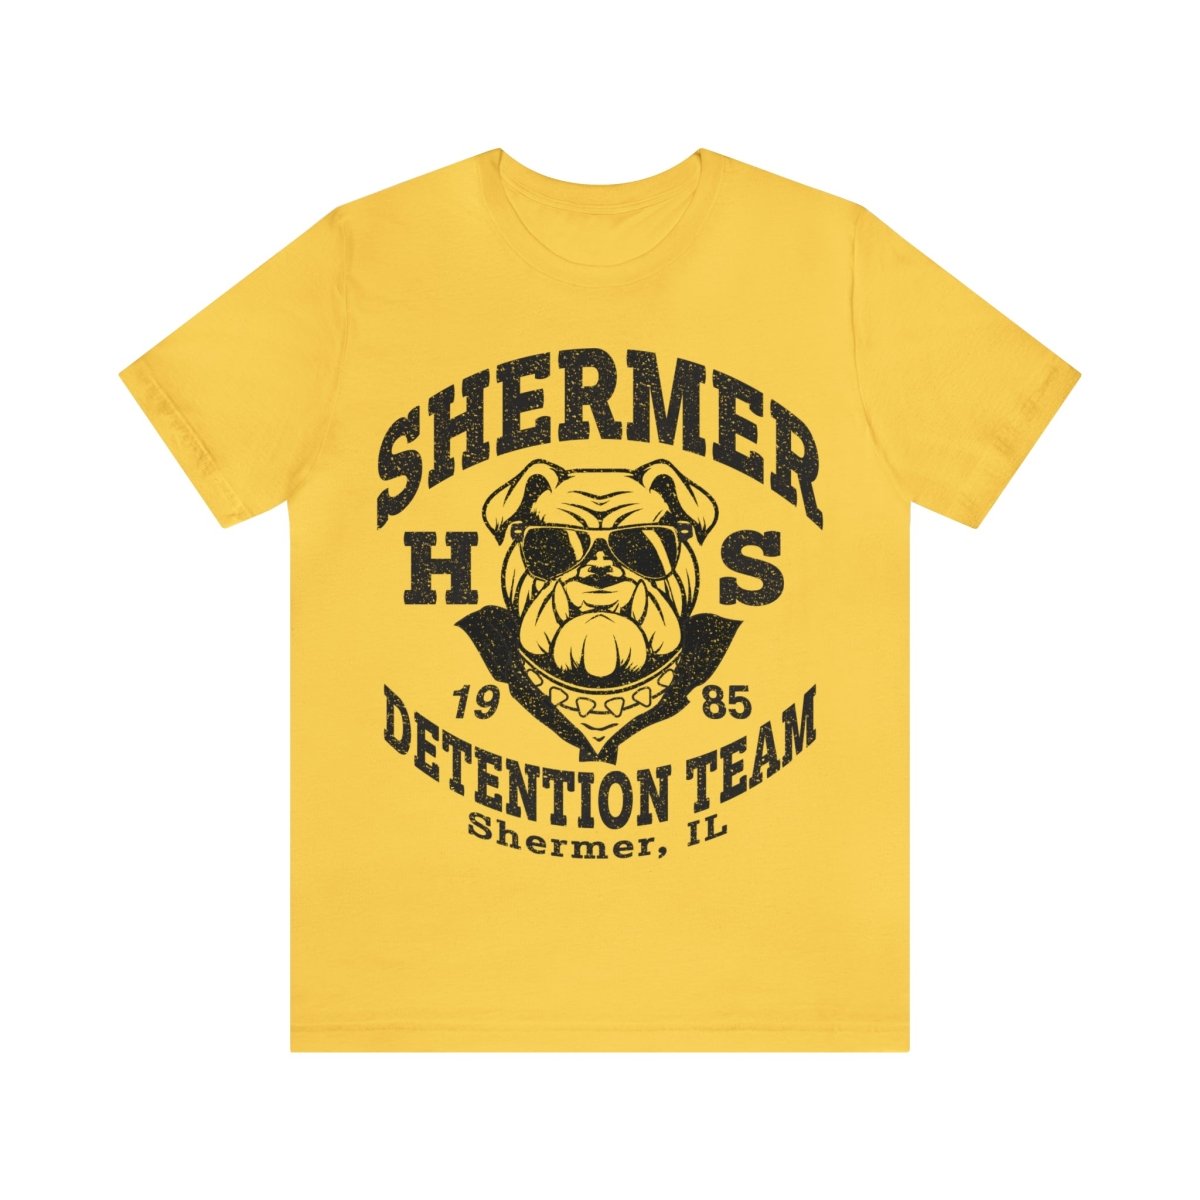 Shermer HS Detention Premium T-Shirt, Library Meeting, High School Nostalgia